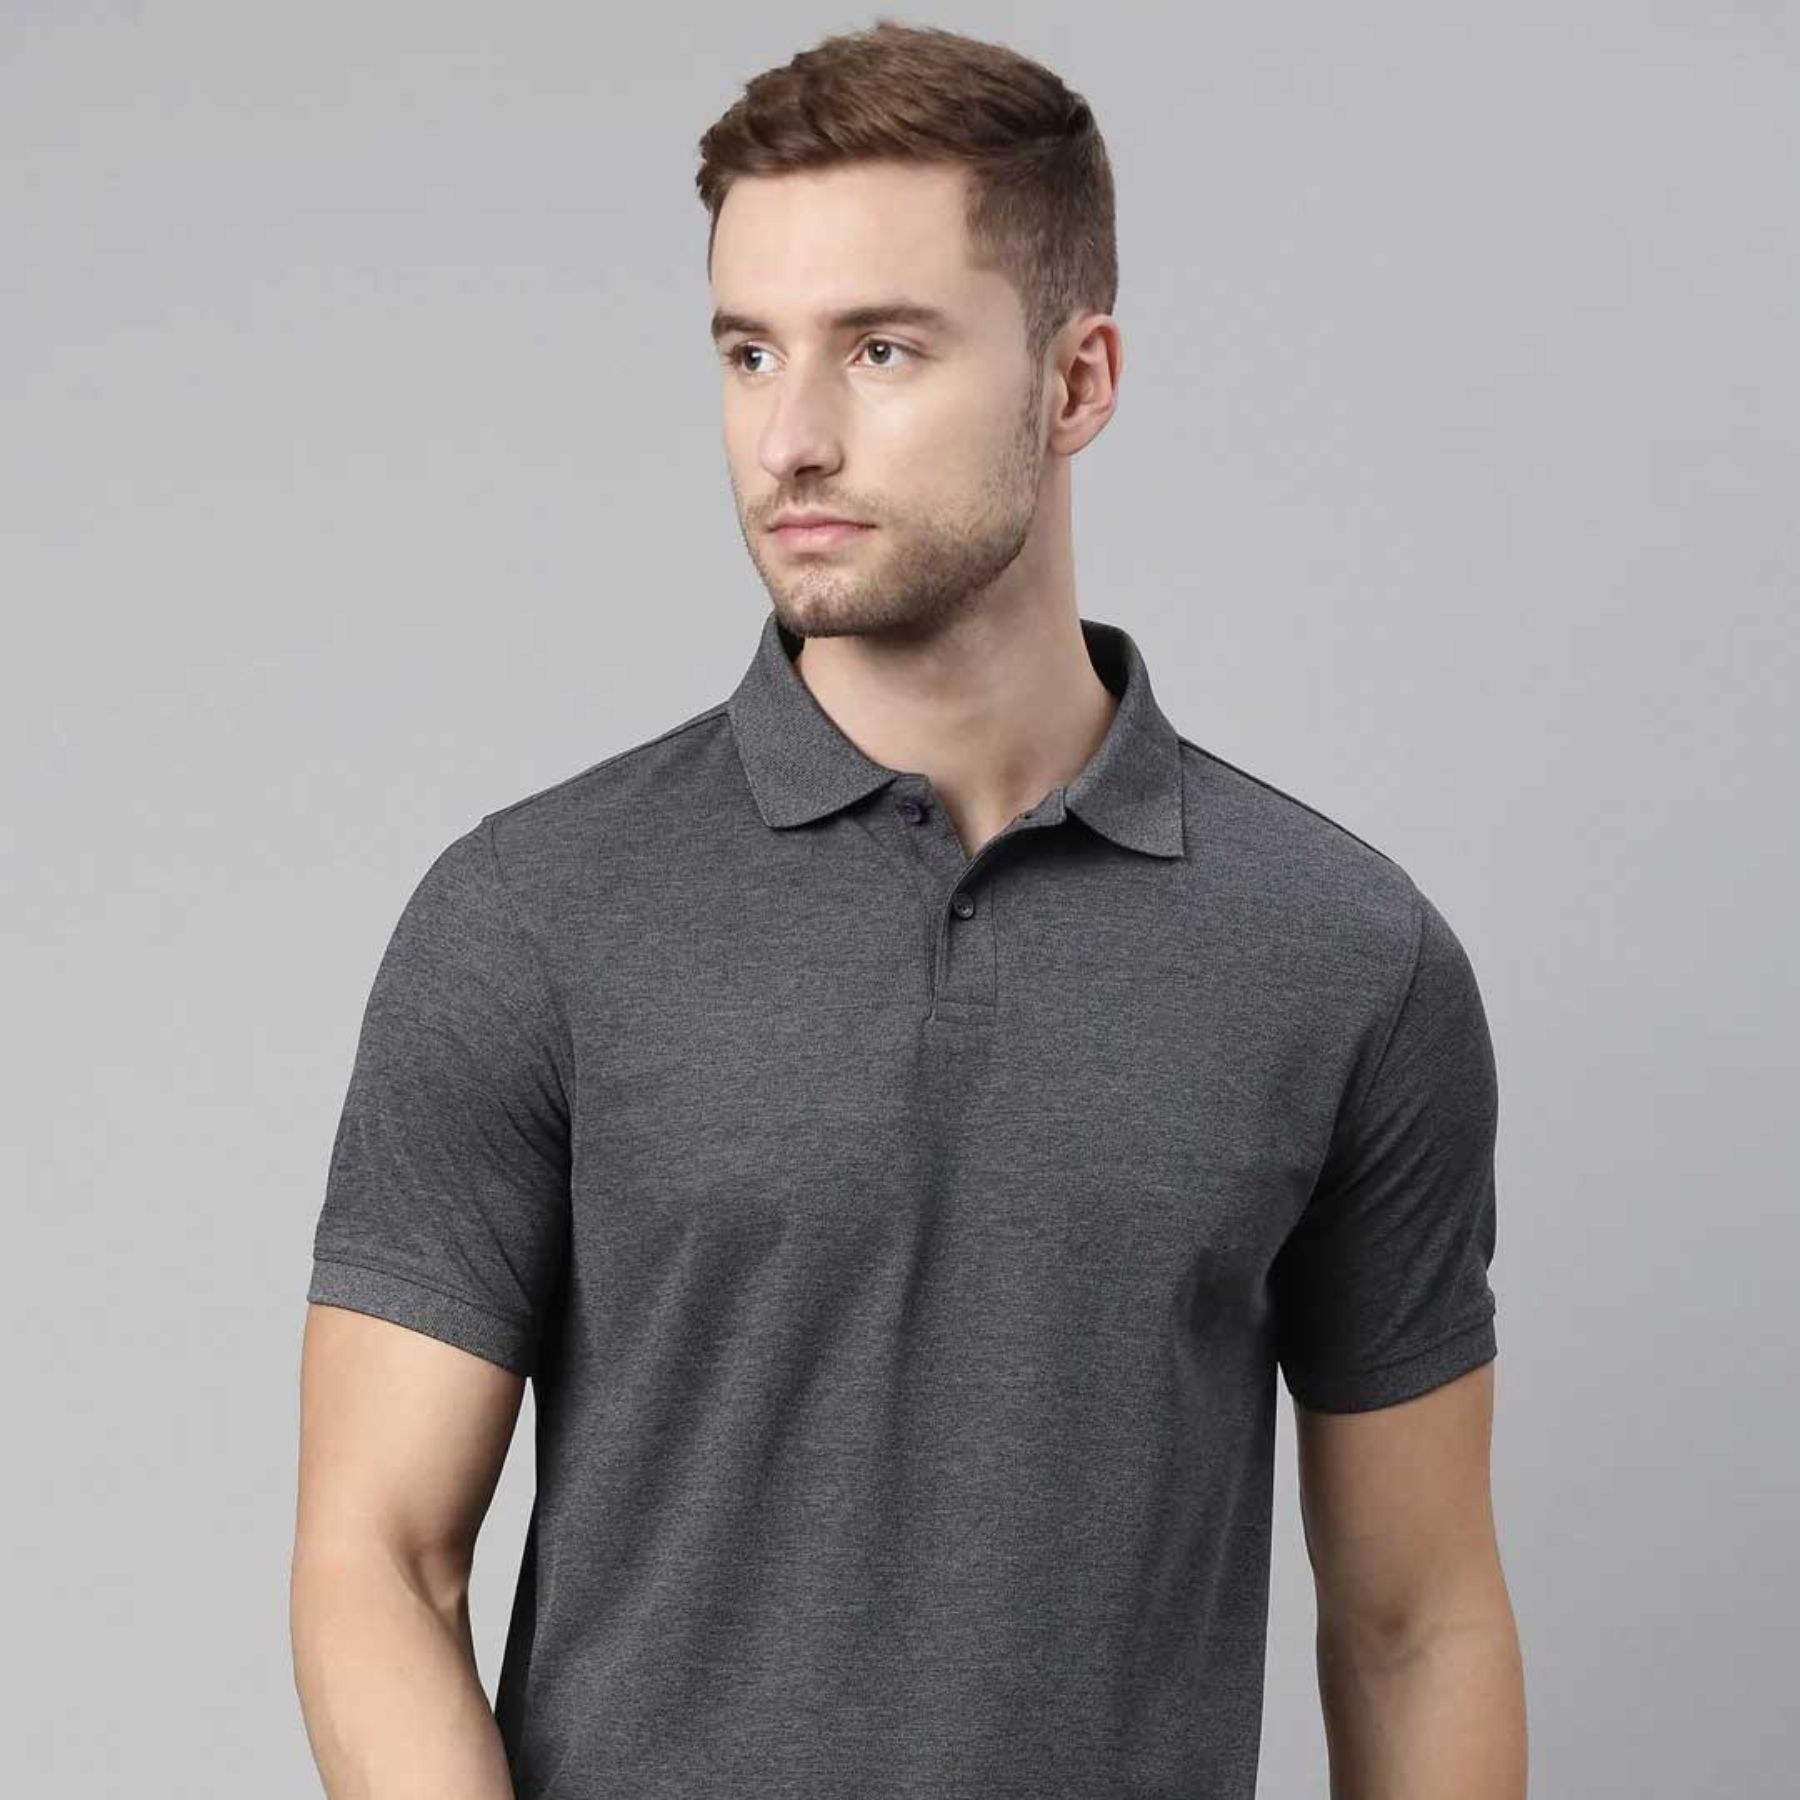 SLAVIA - Super Dri Fit Polo T Shirt, Dry Fit T Shirts India